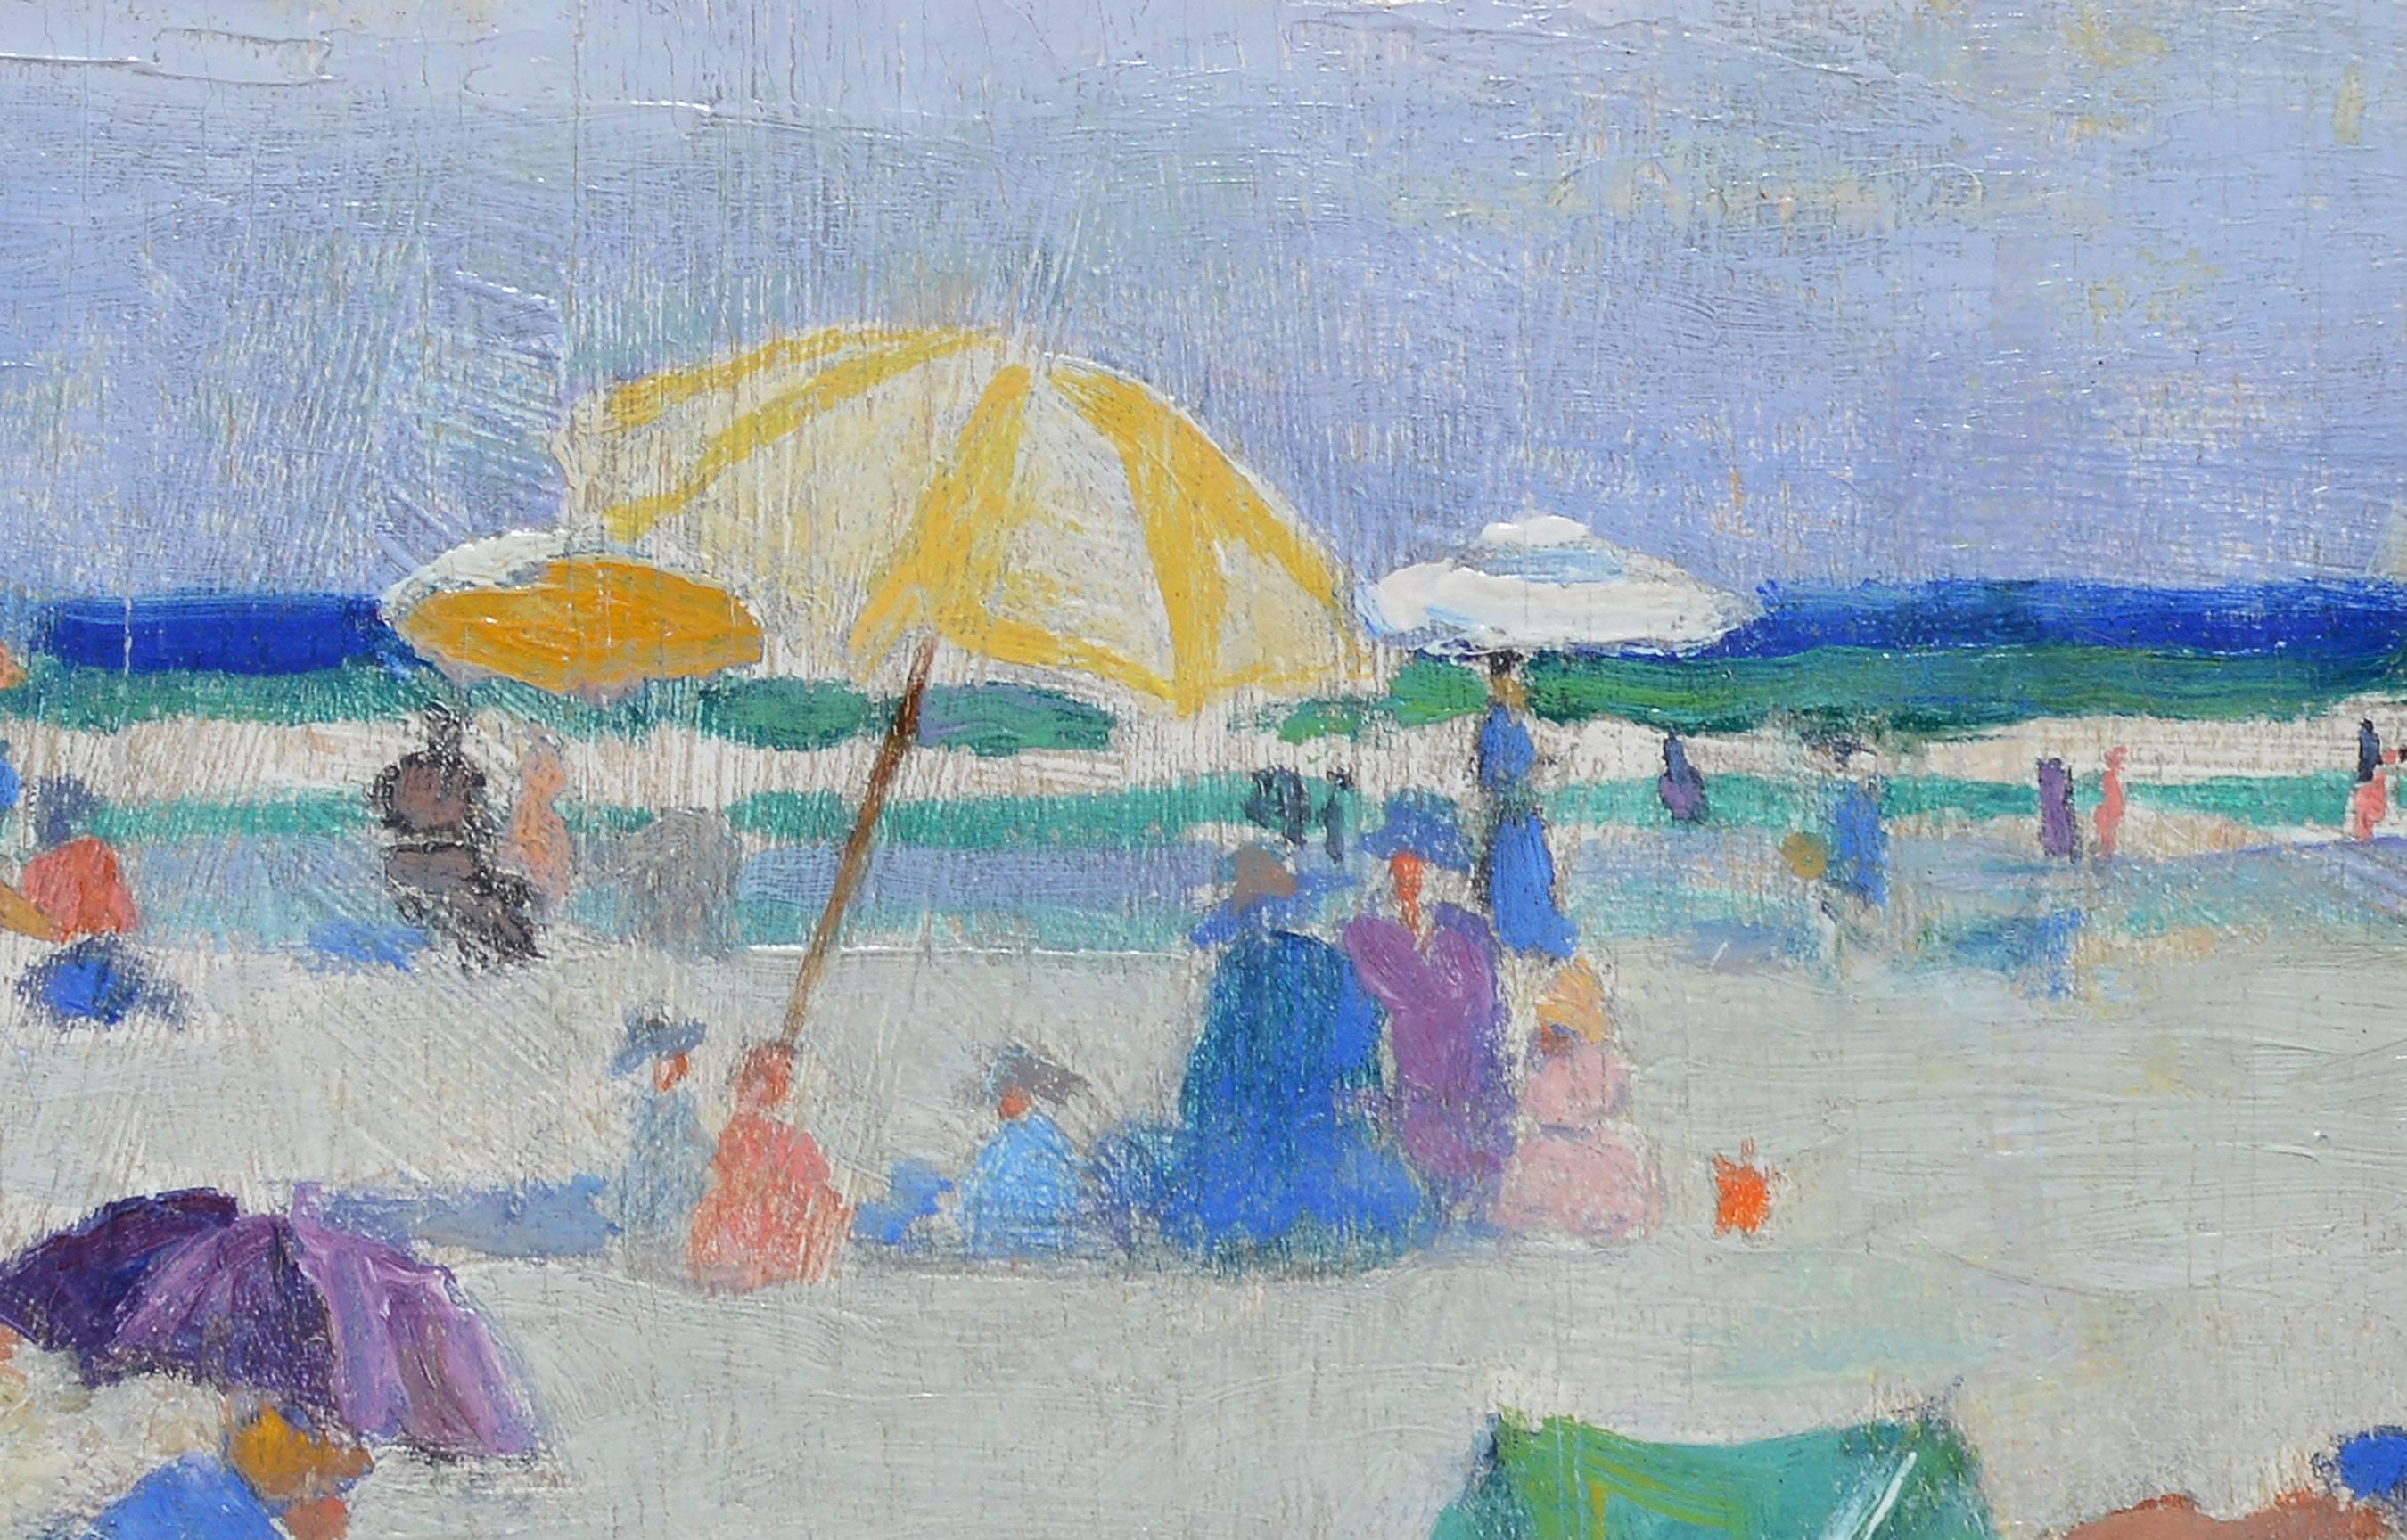 Summer Day at the Beach - Impressionist Painting by Paulette Victorine J. Van Roekens